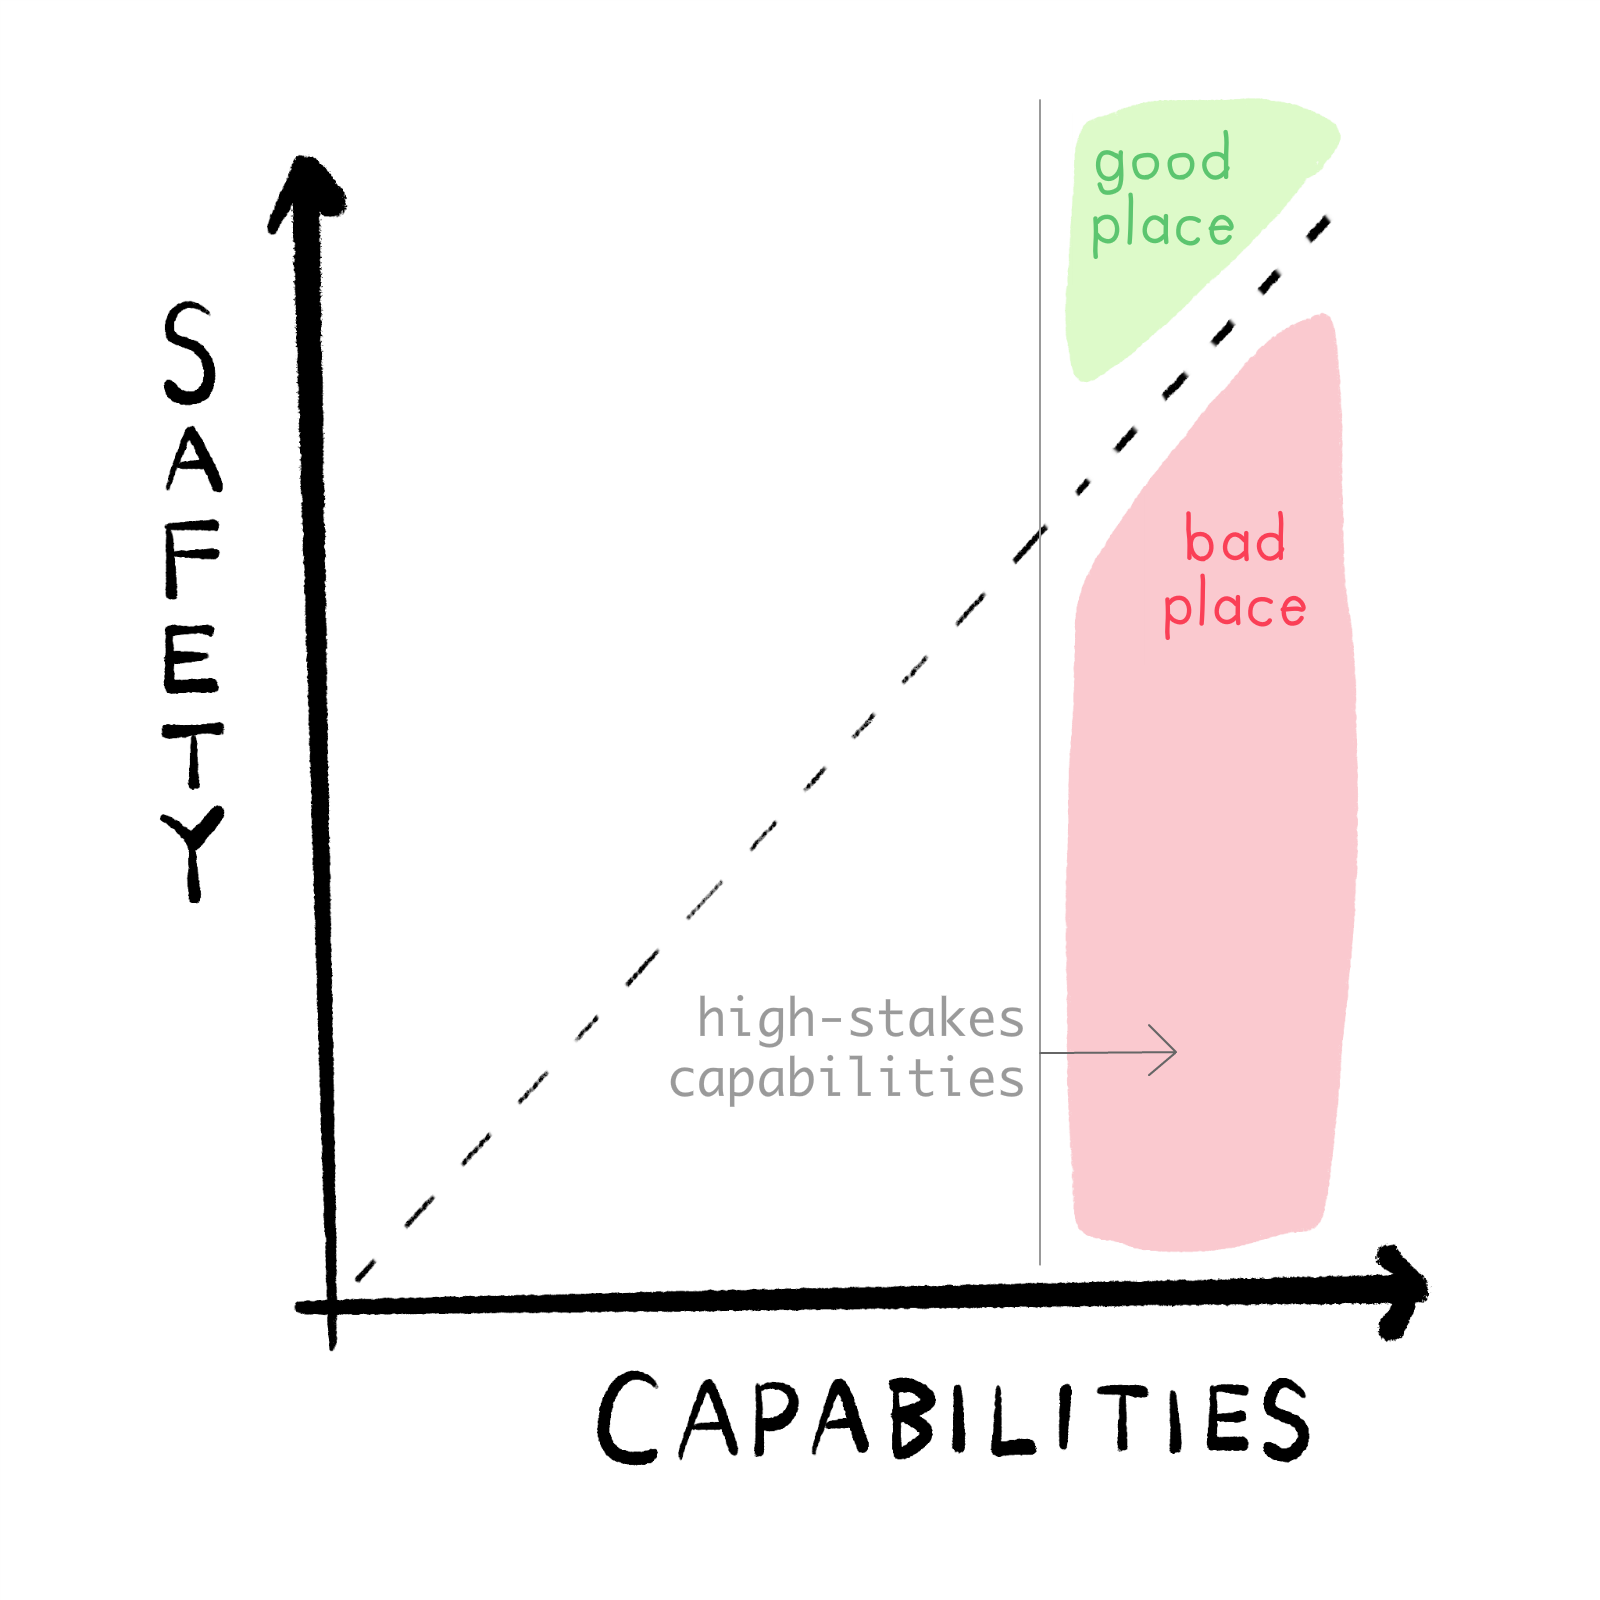 Same graph, but highlighting "high capabilities" threshold